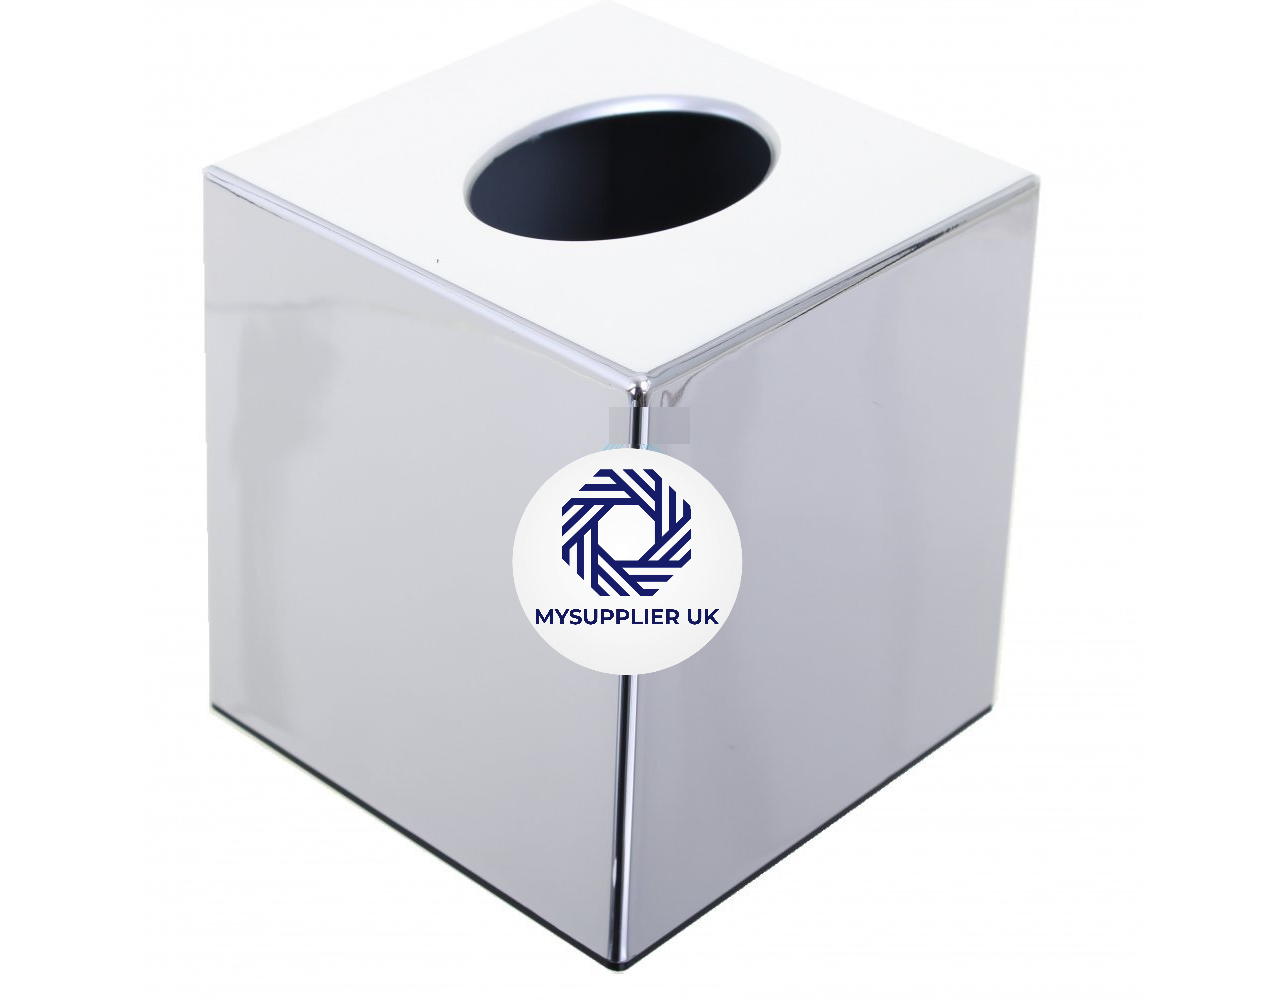 Cubed Tissue Box Cover - Polished Chrome - 1 Dispenser